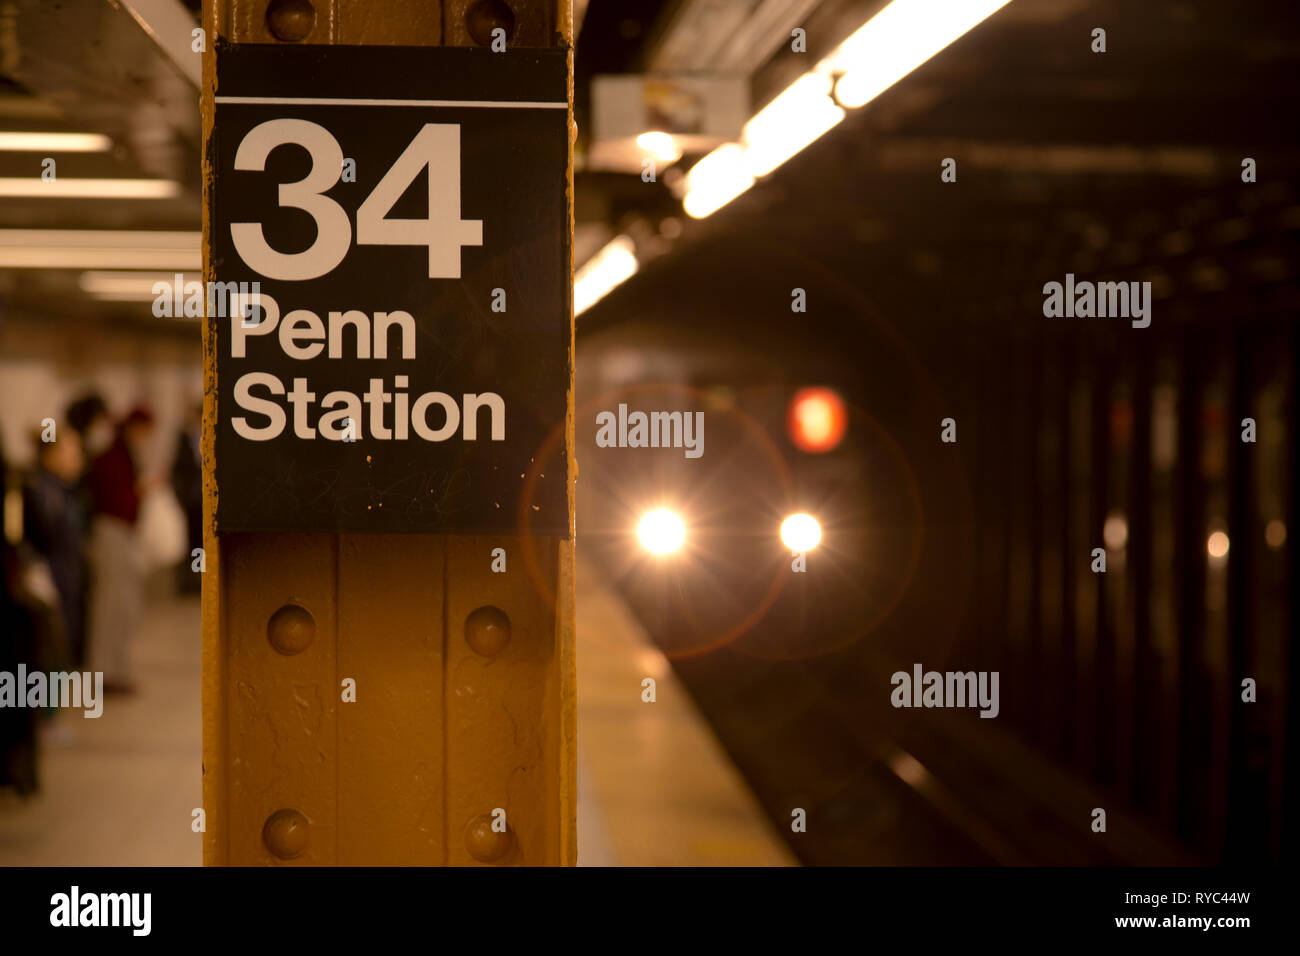 34 Penn Station, New York City Metro, MTA Stock Photo